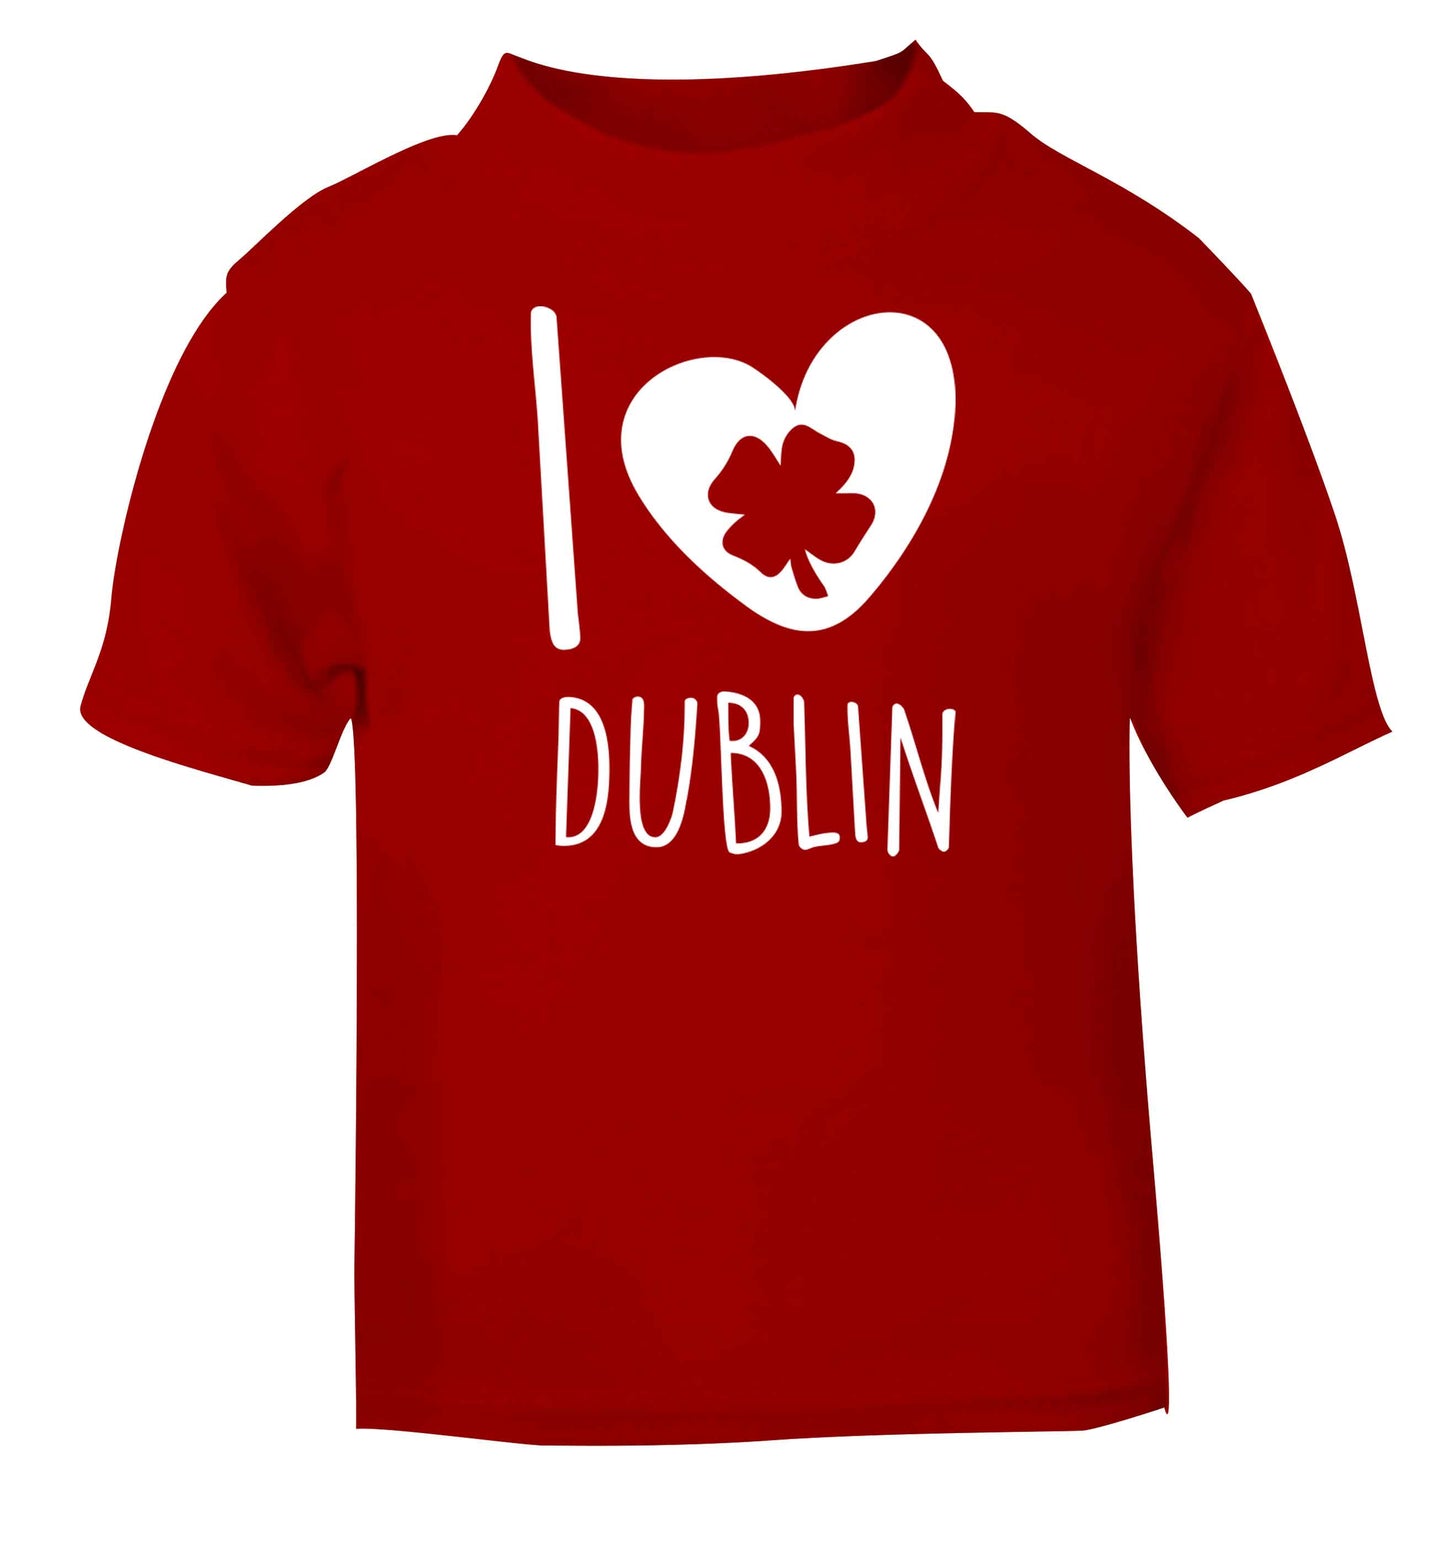 I love Dublin red baby toddler Tshirt 2 Years